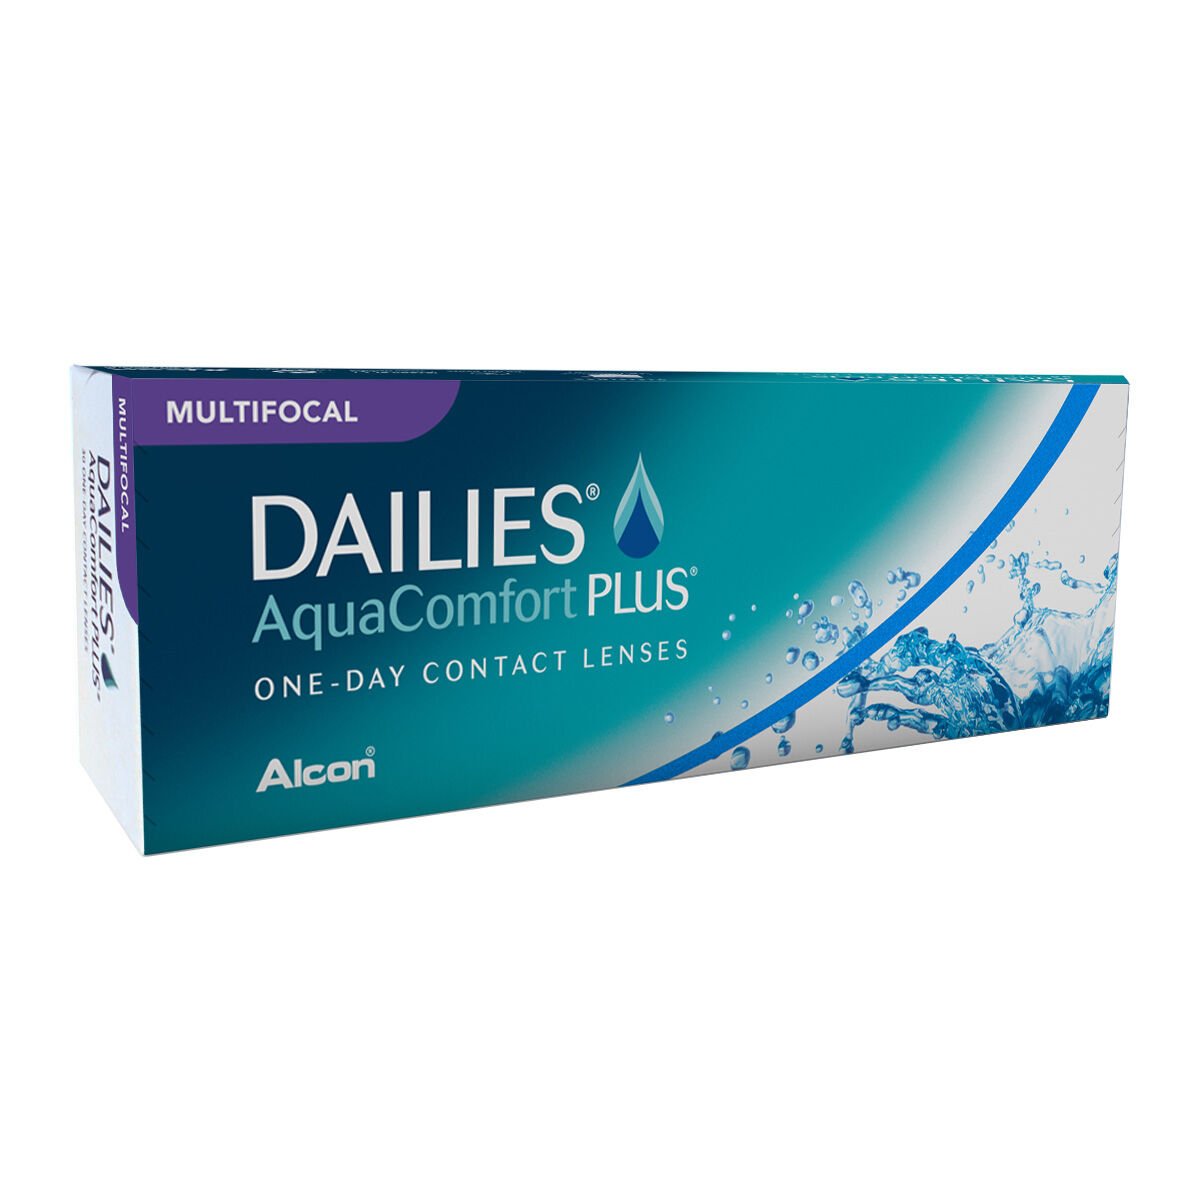 Alcon Dailies Aqua Comfort Plus Multifocal (30 Contact Lenses), Ciba Vision/Alcon Multifocal Daily Lenses, Nelfilcon A